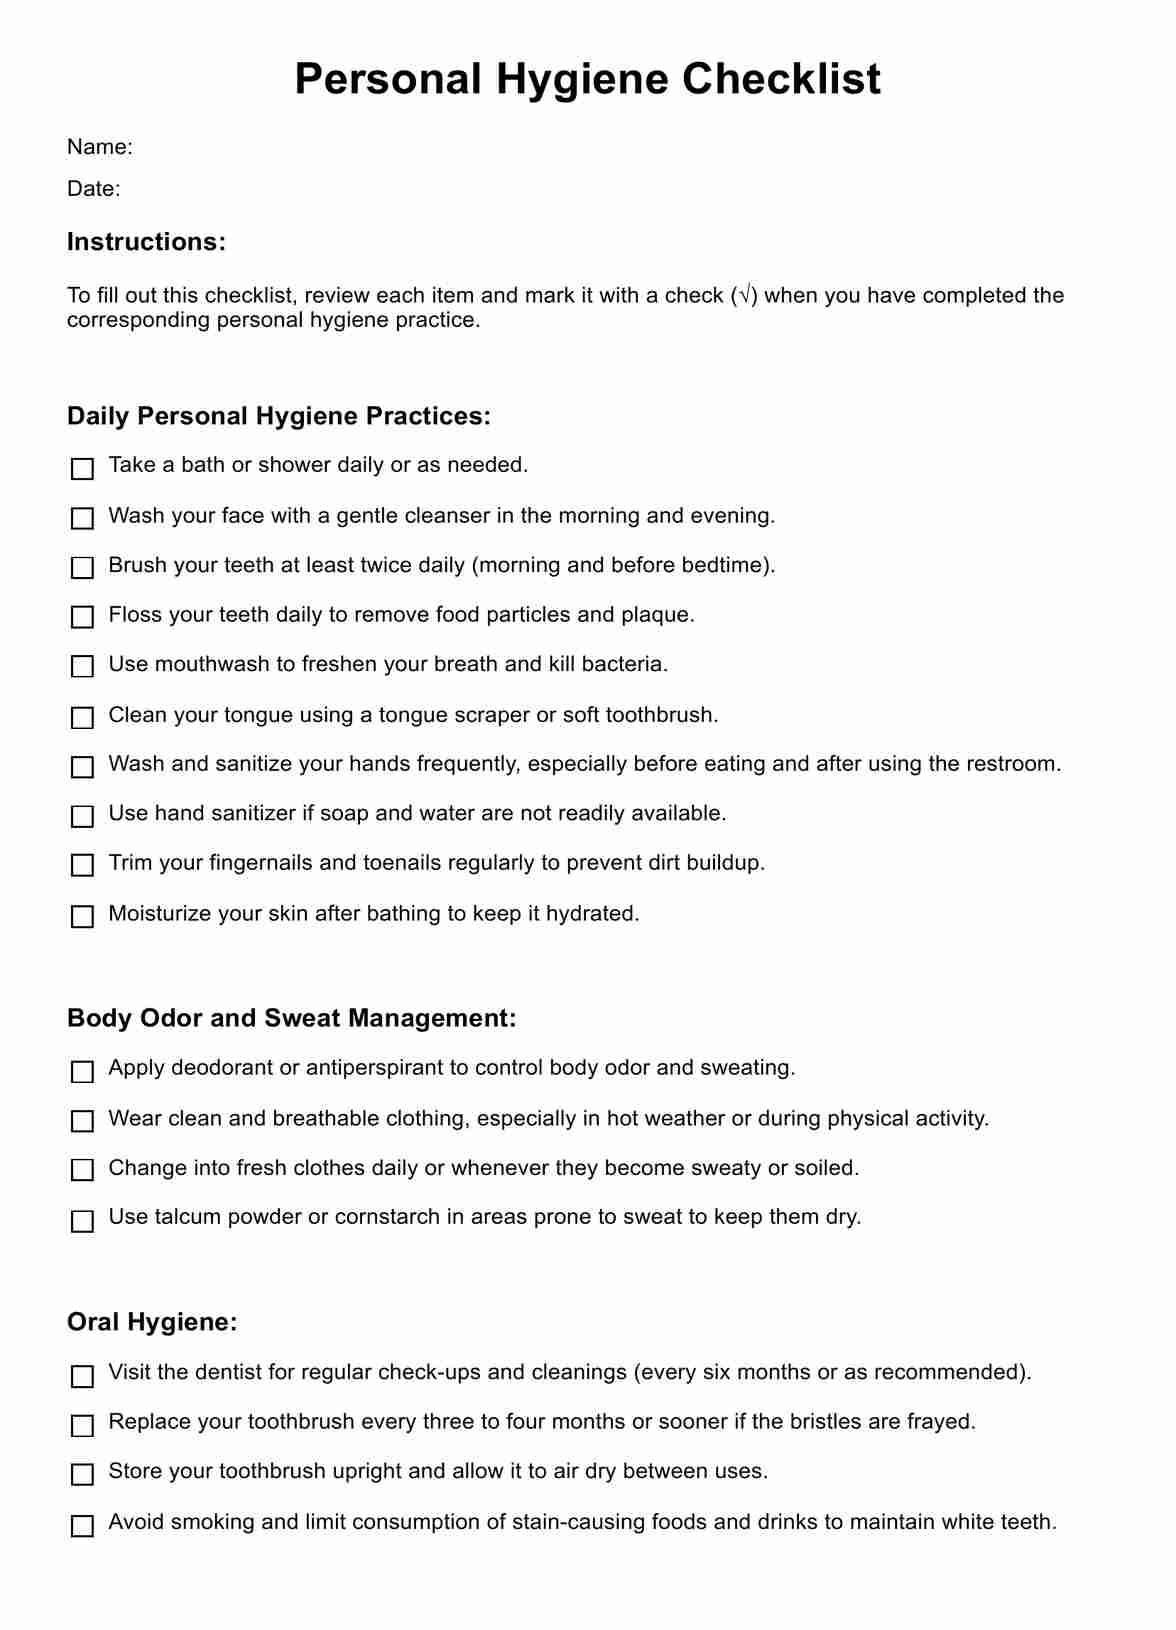 Personal Hygiene Checklist PDF Example